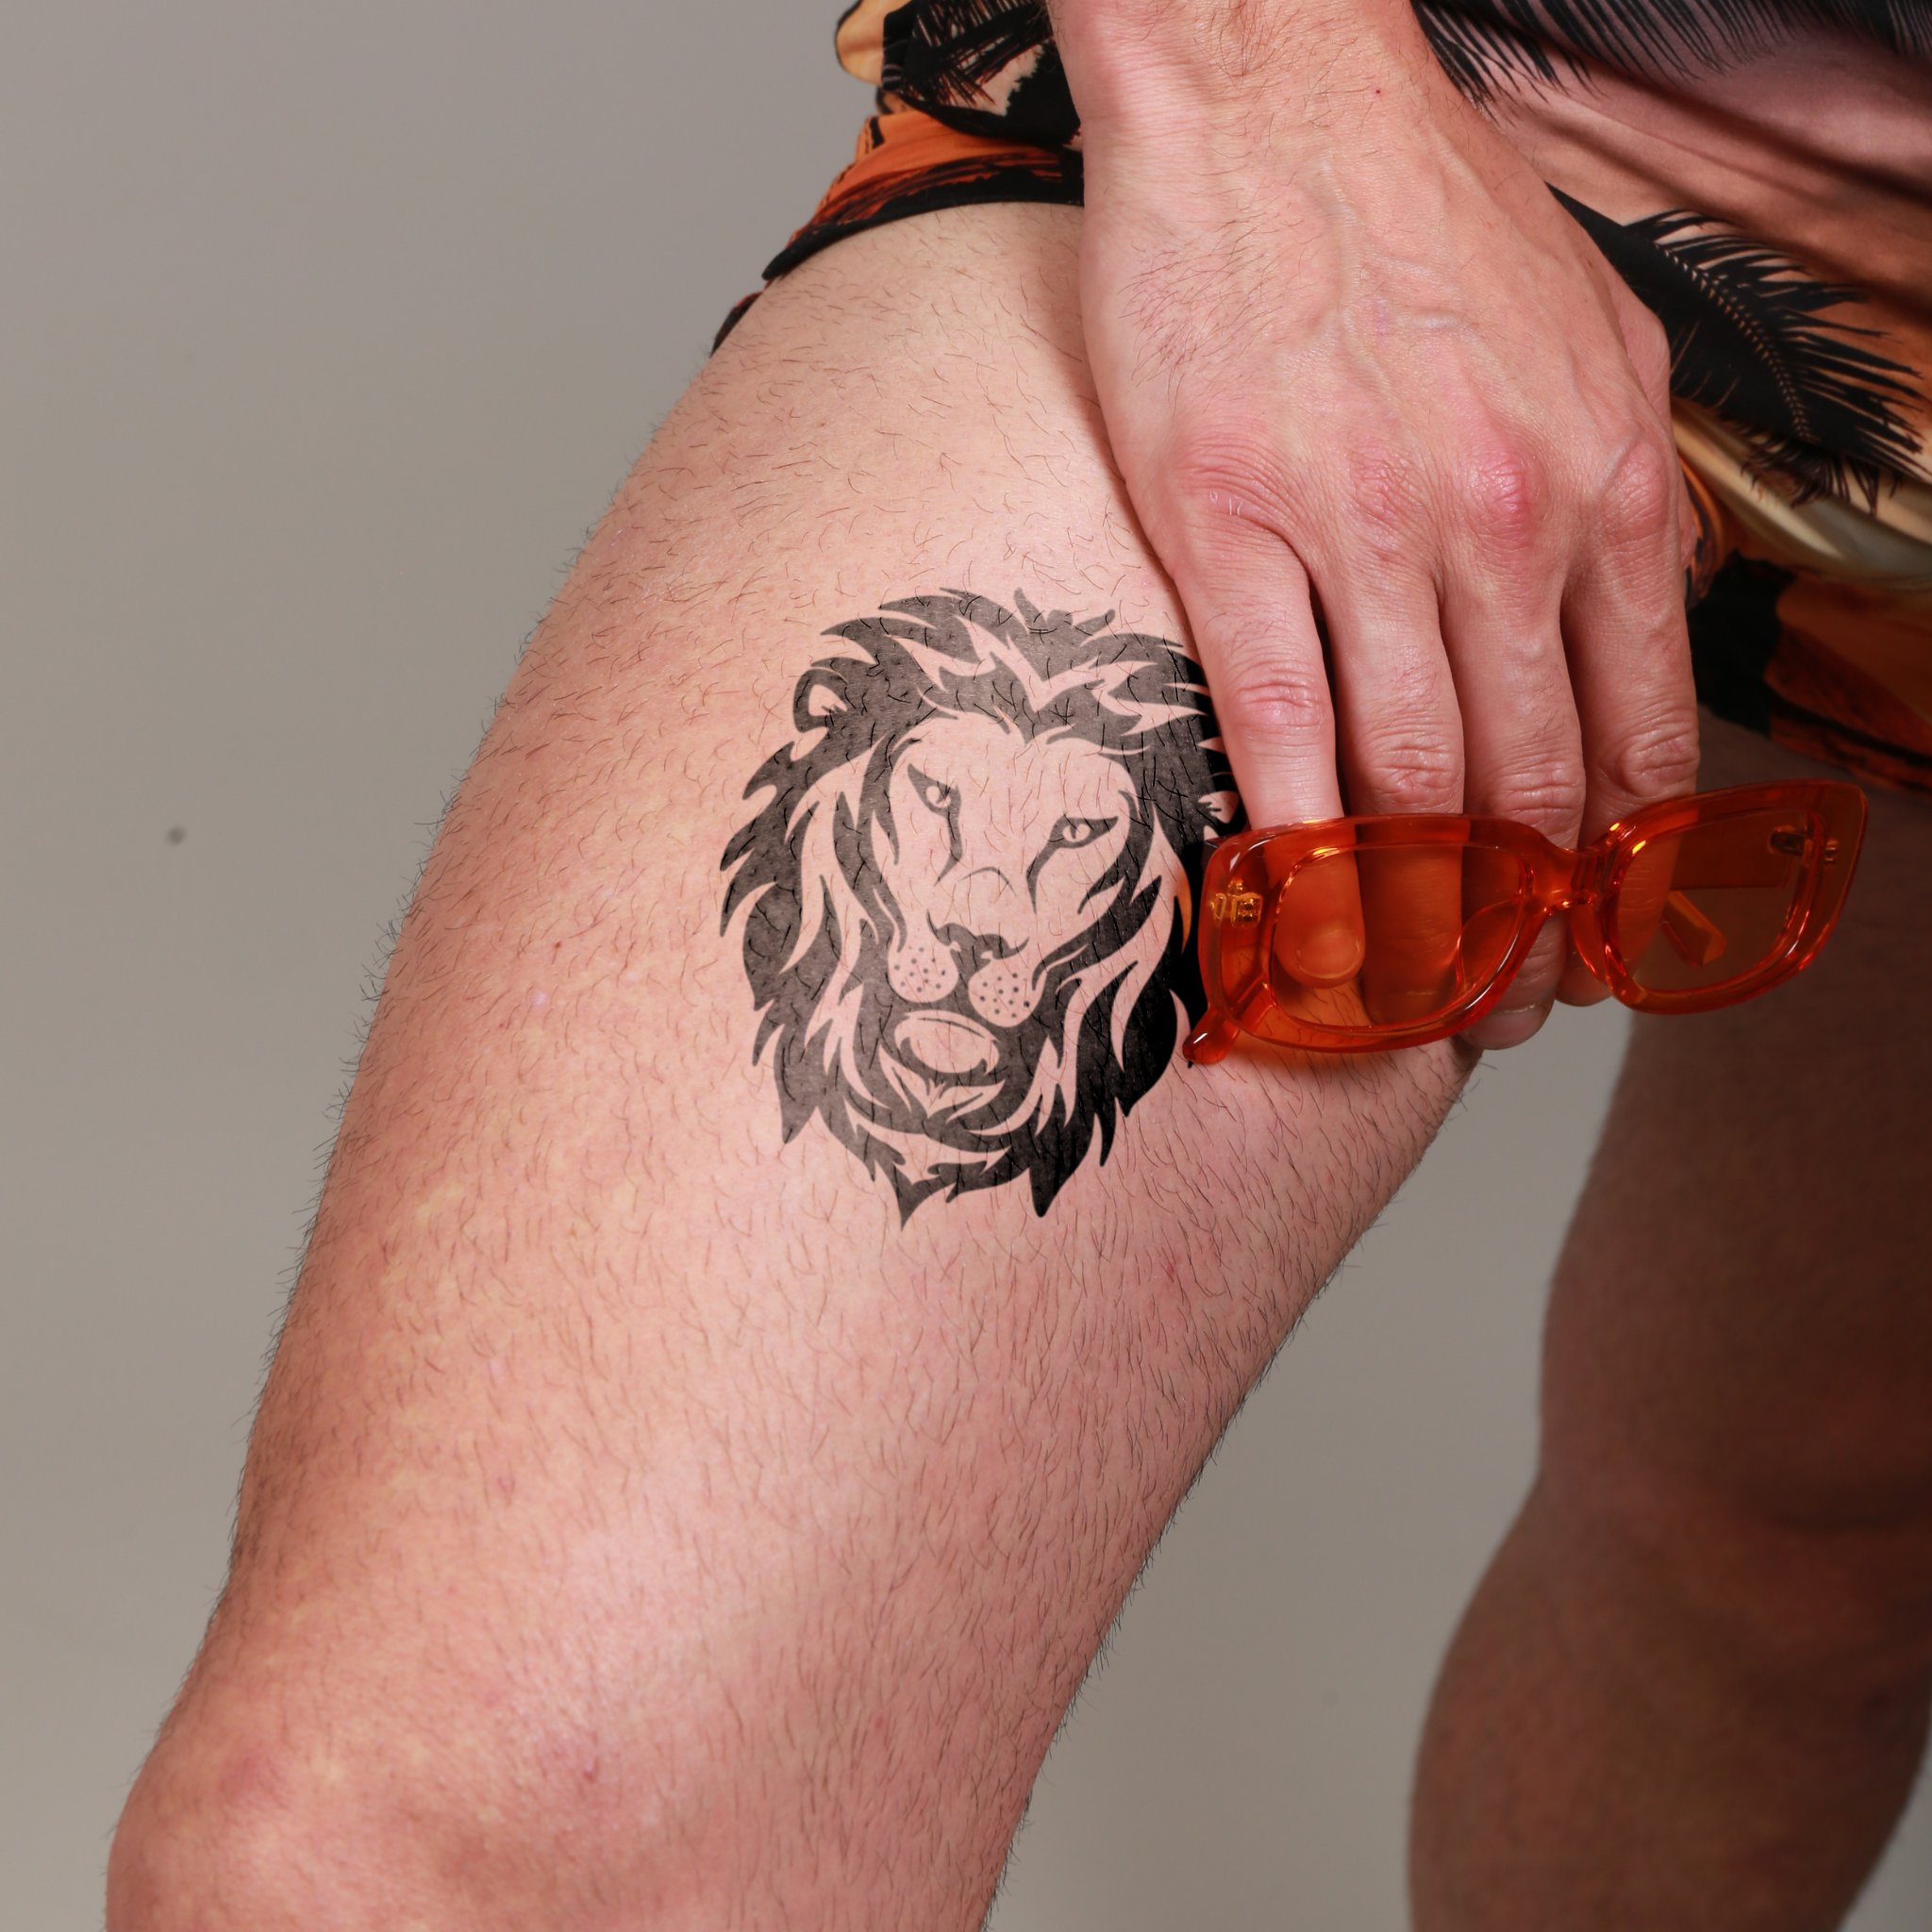 Armband Tattoo Design Ideas For Men. - TiptopGents | Armband tattoo design,  Arm band tattoo, Forearm band tattoos